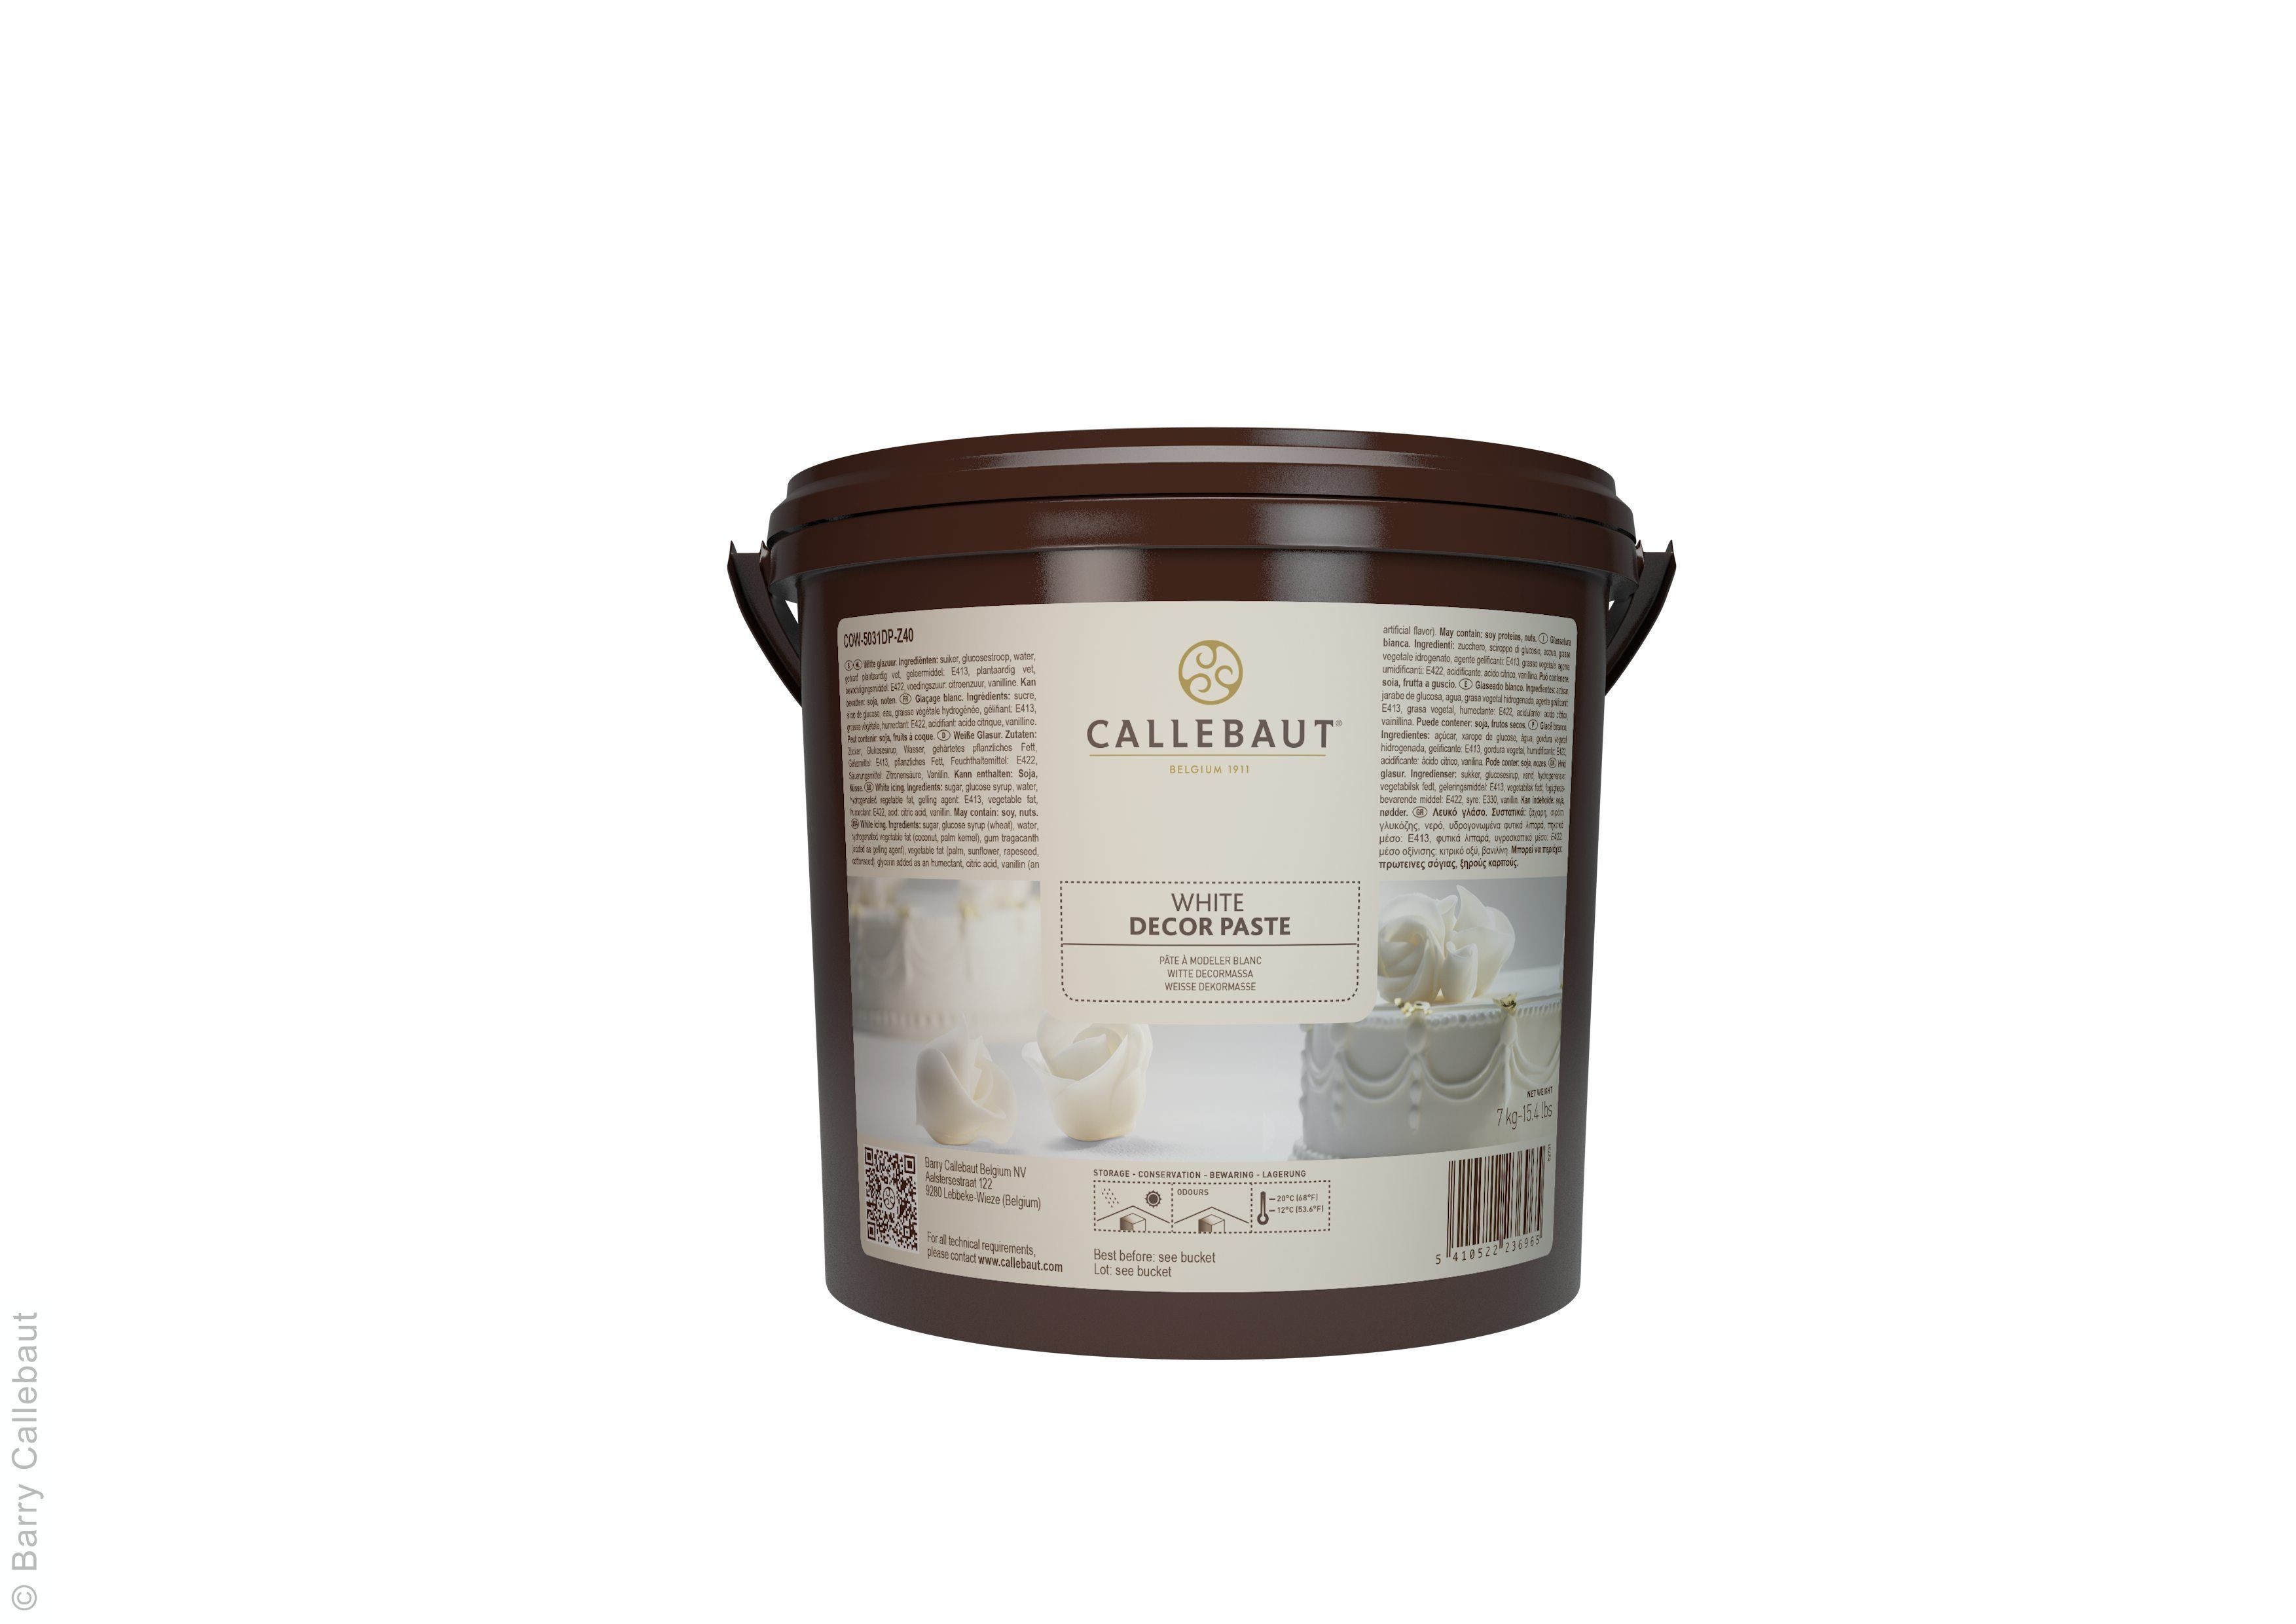 Barry Callebaut Praliné hazelnootpasta 1kg 